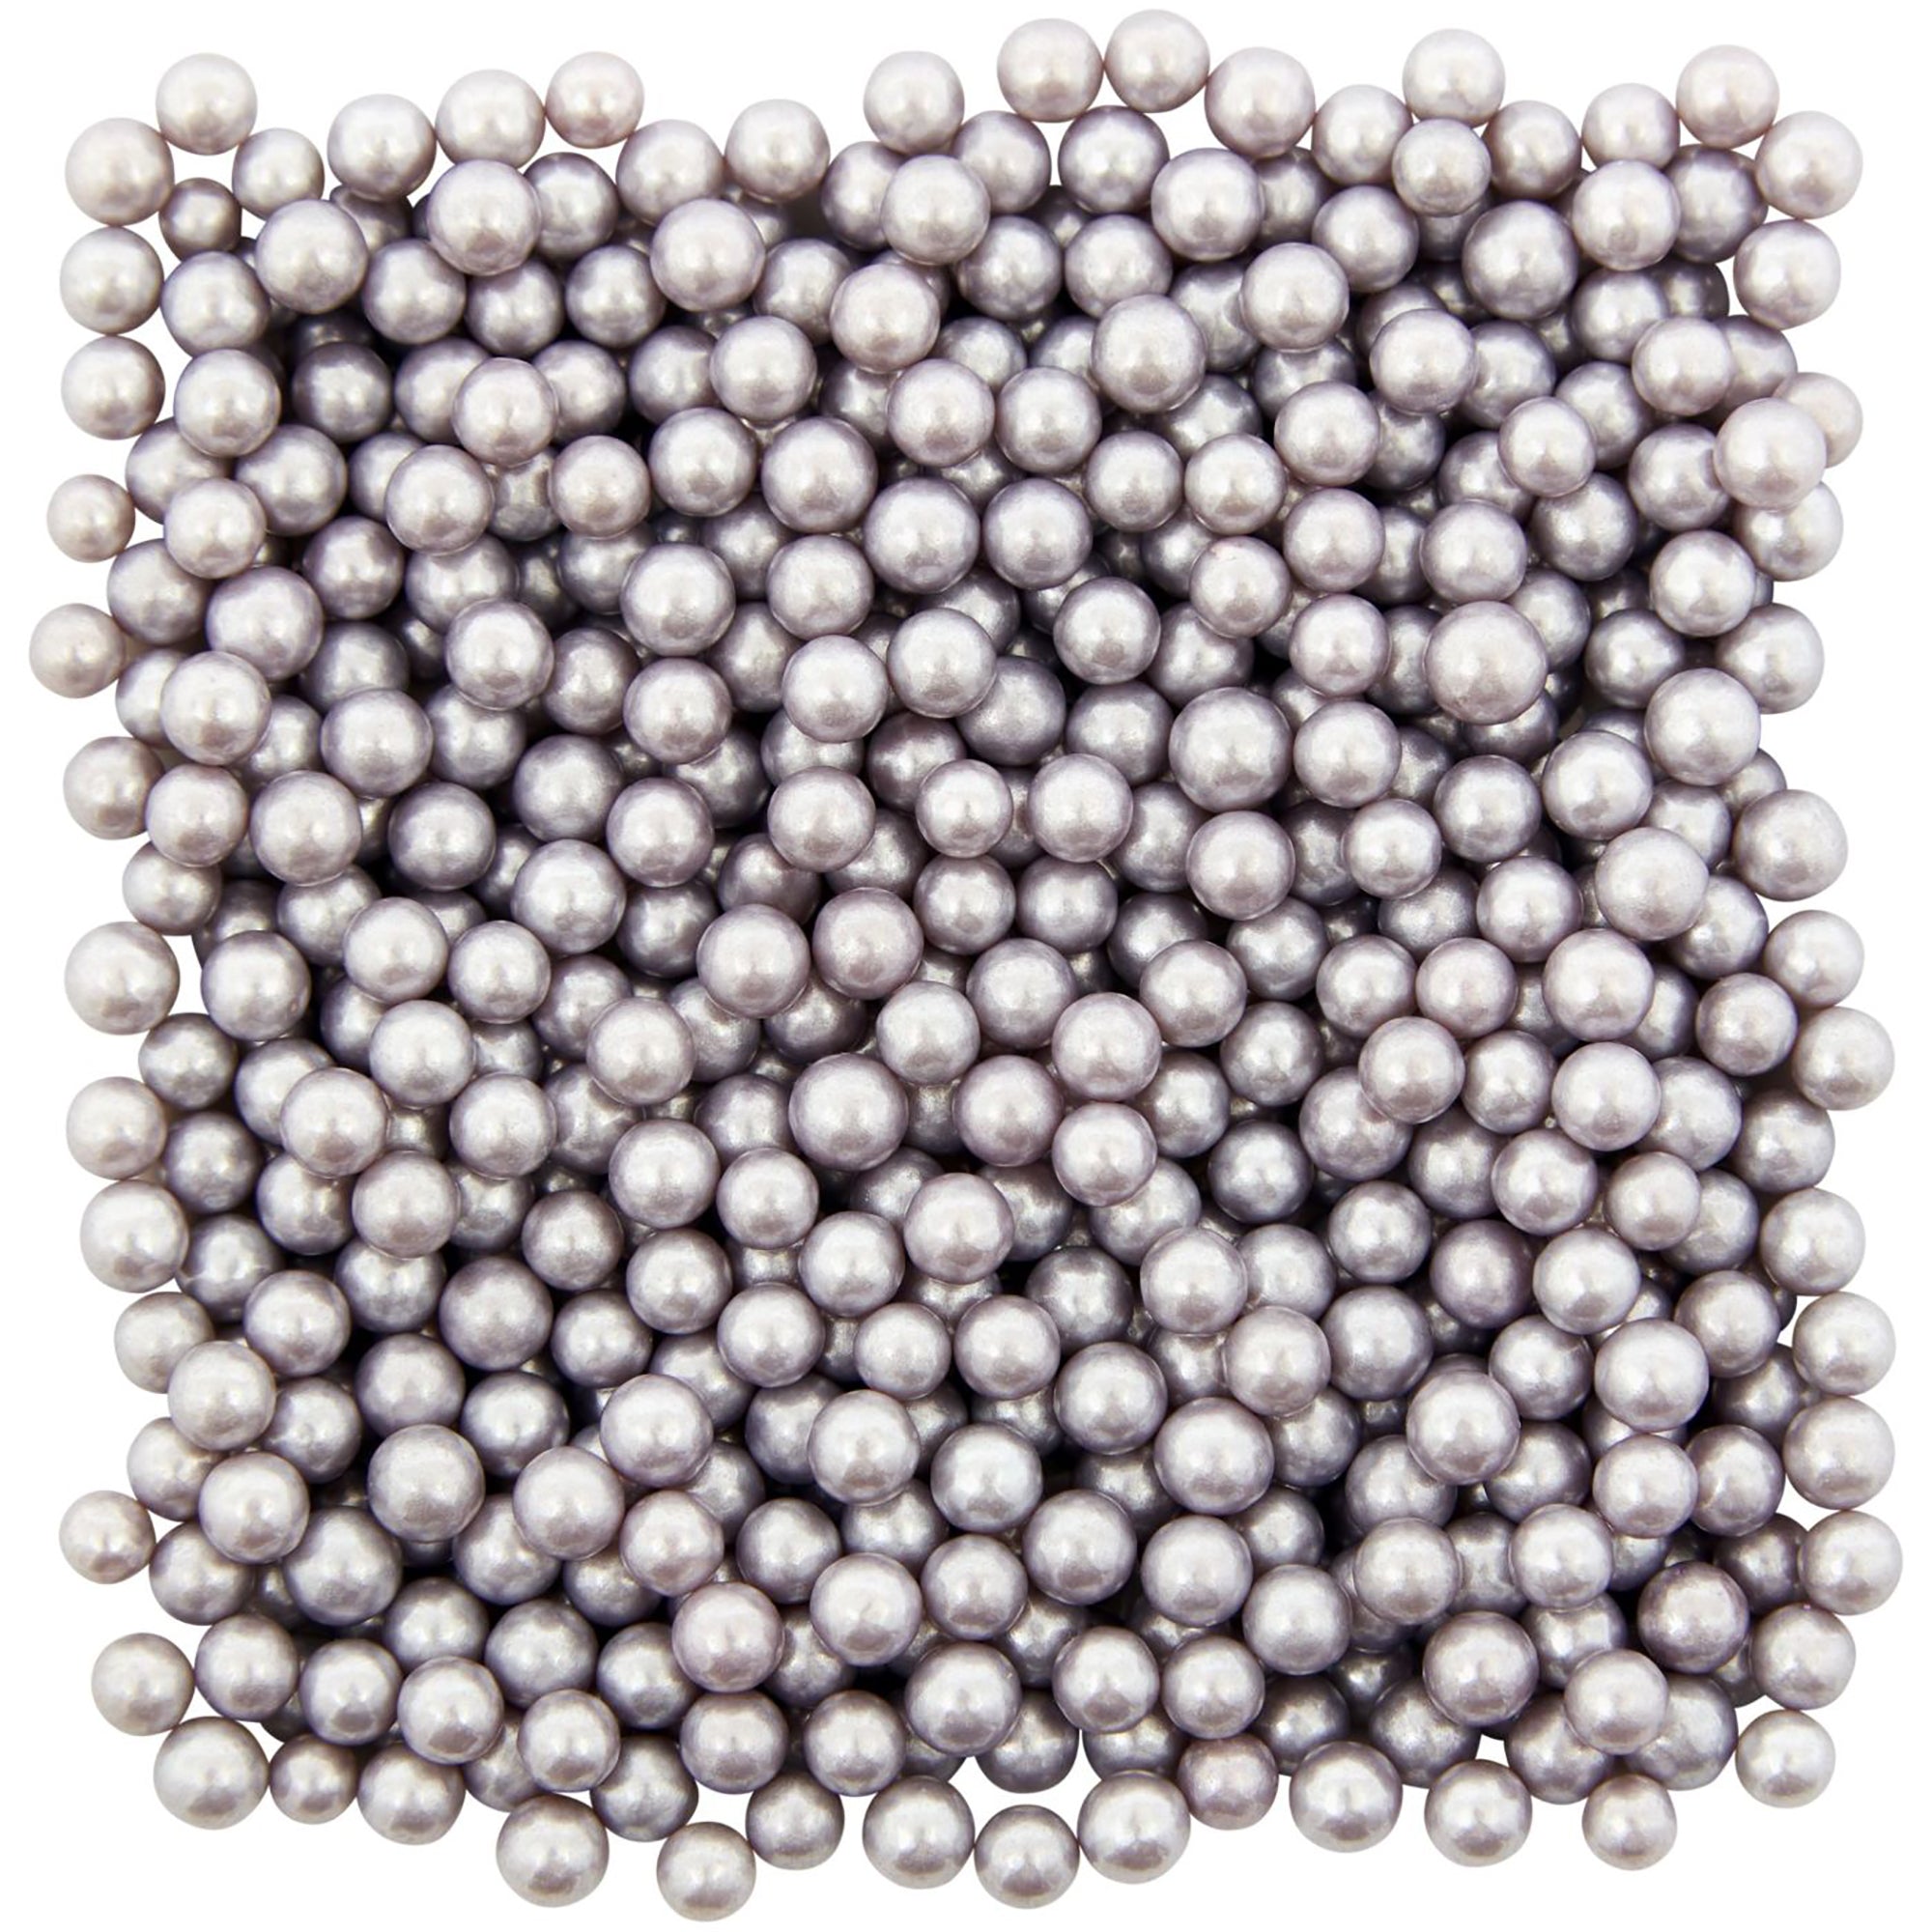 Wilton Sprinkles Silver Sugar Pearls 4.8oz (136g)